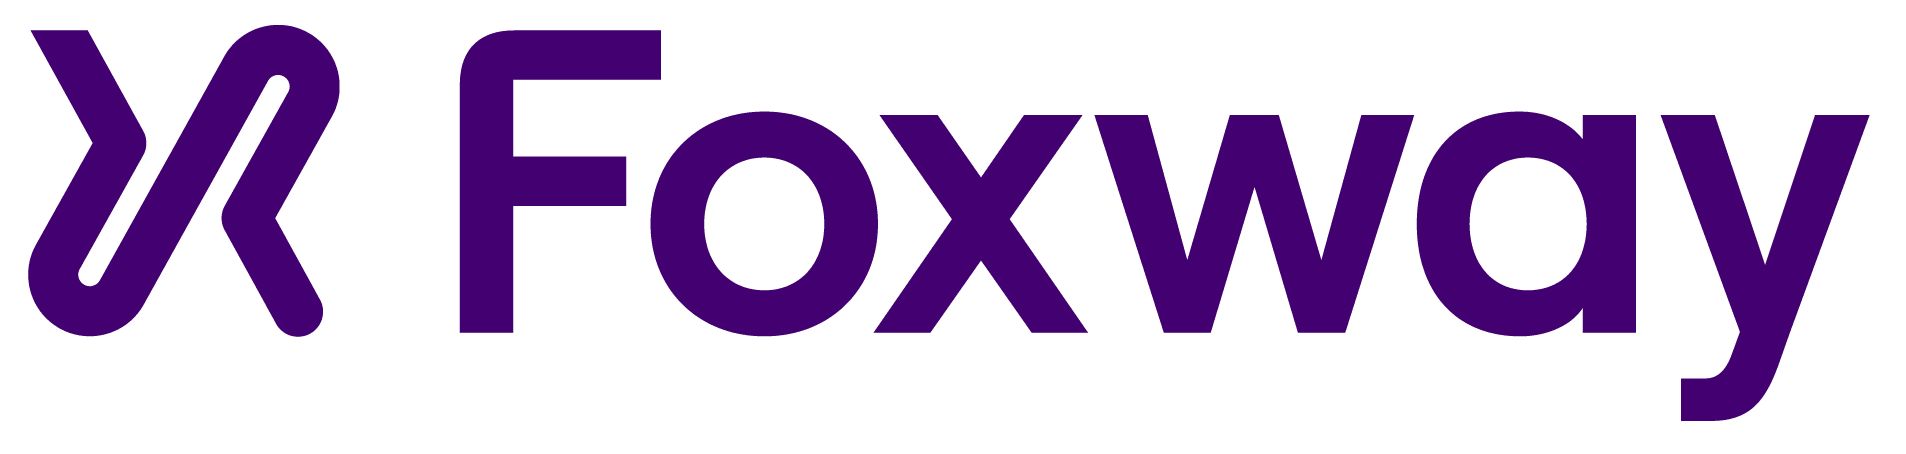 foxway-symbolwordmark-rgb-purple